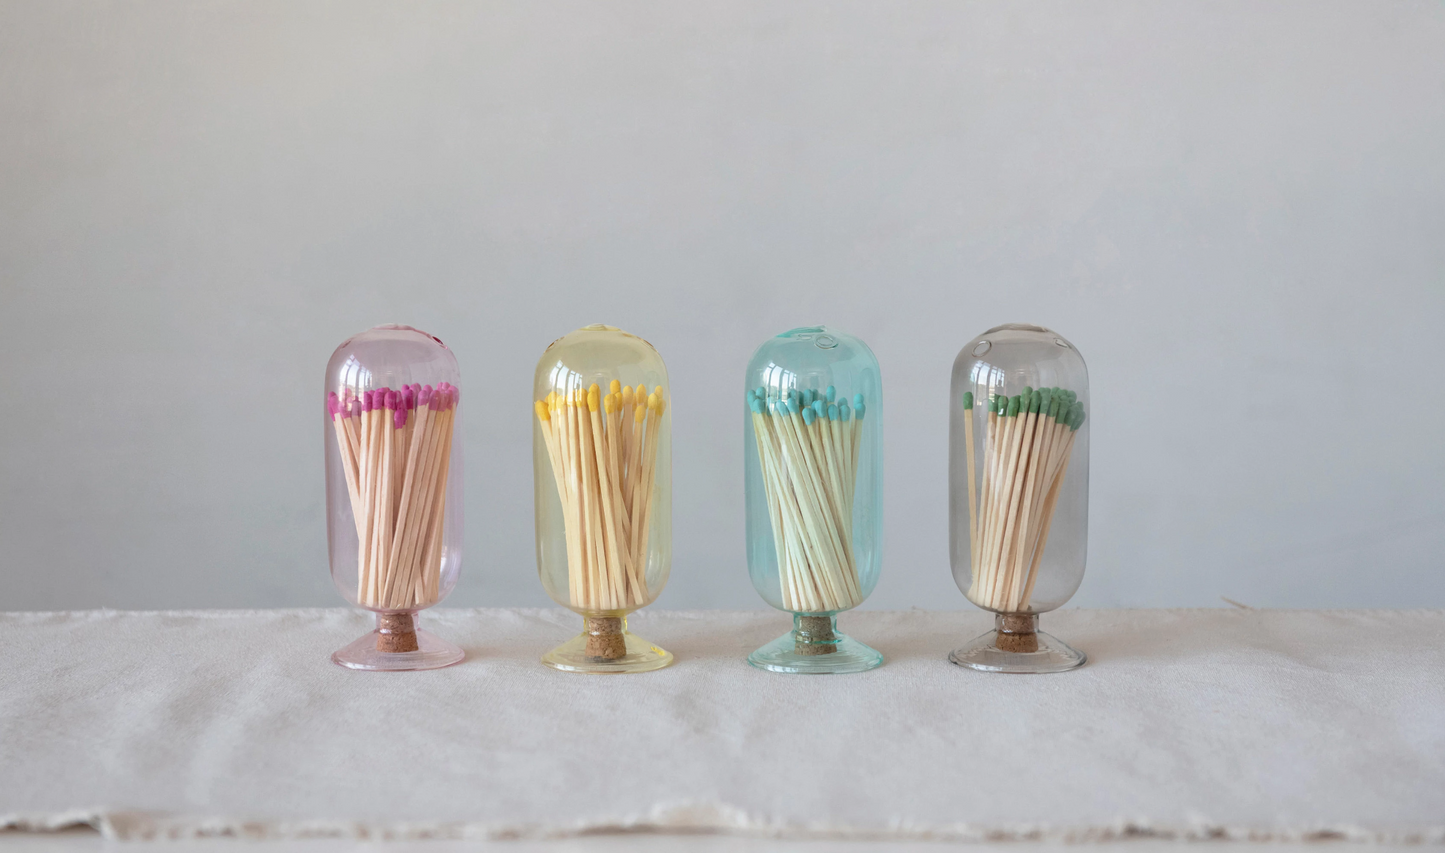 Festive Glass Match Holders - Four Colors